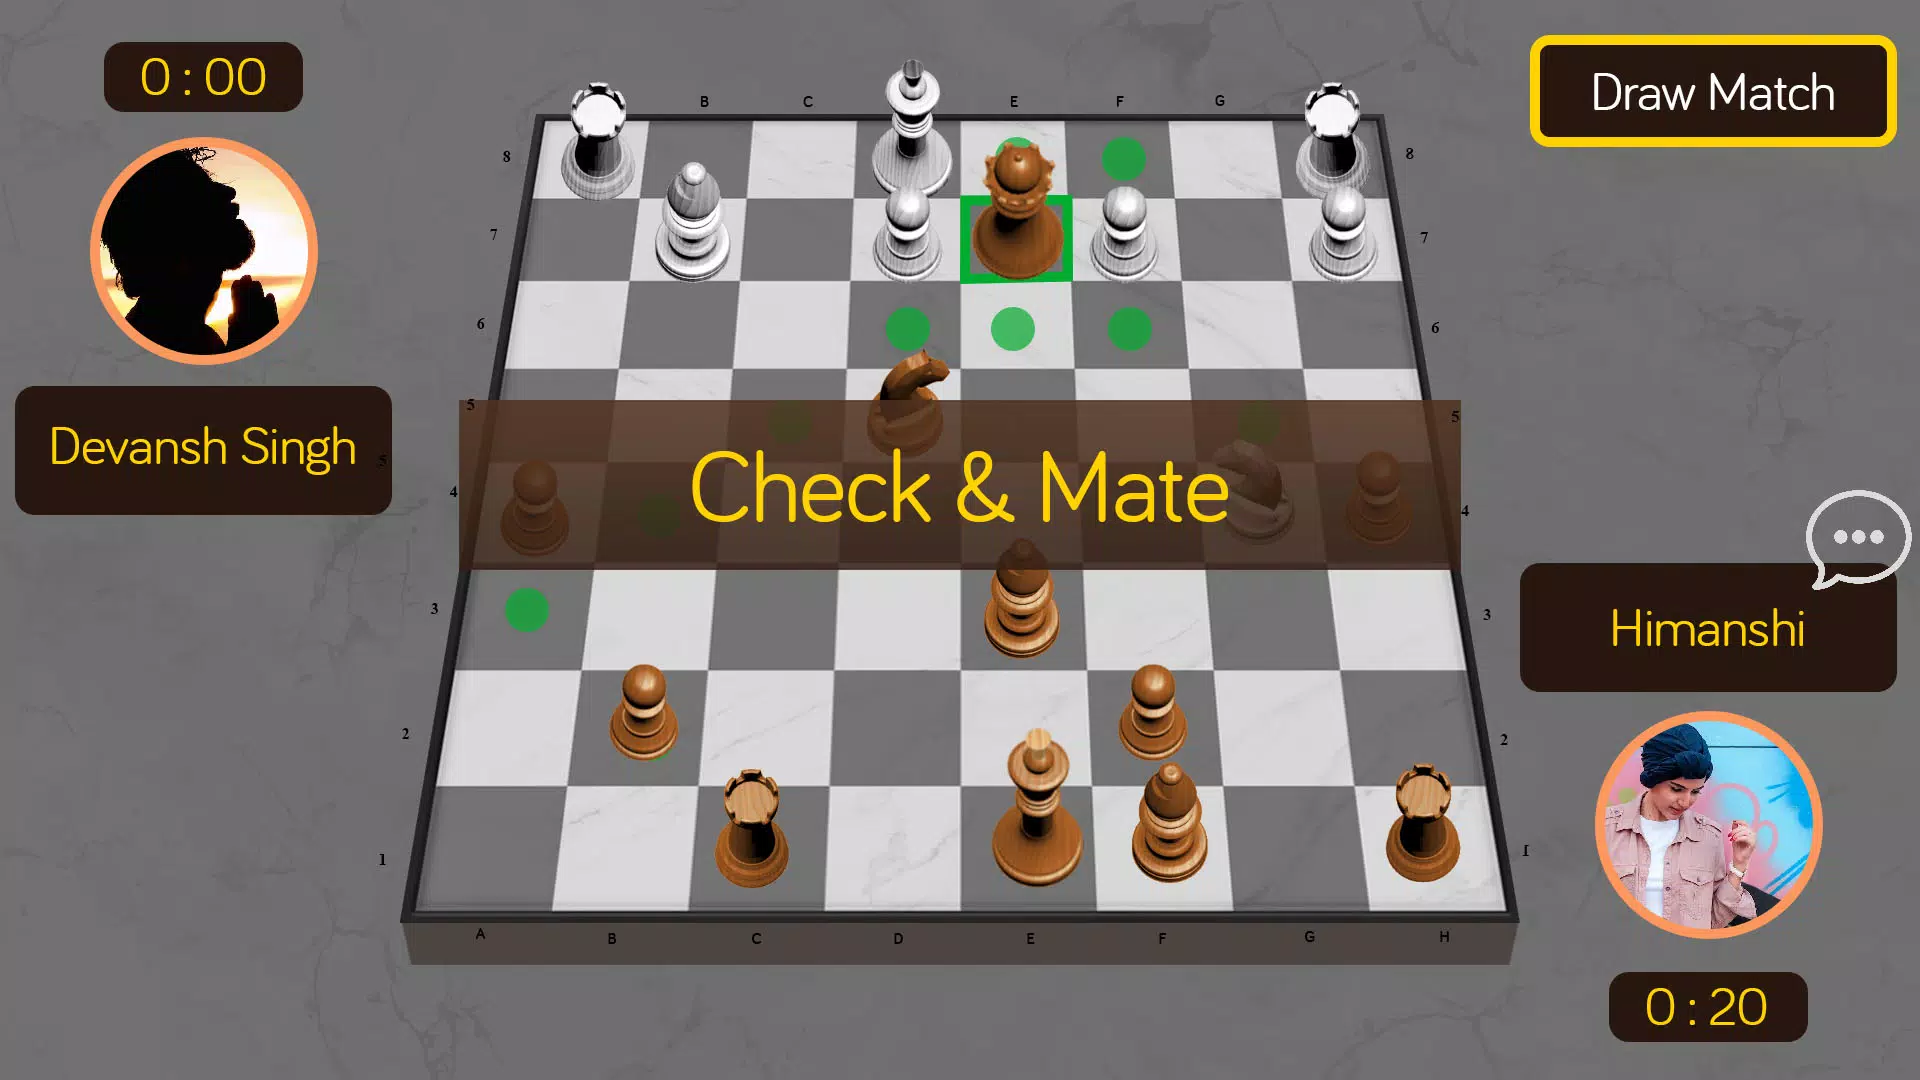 Chess Master King APK v22.09.27 Free Download - APK4Fun